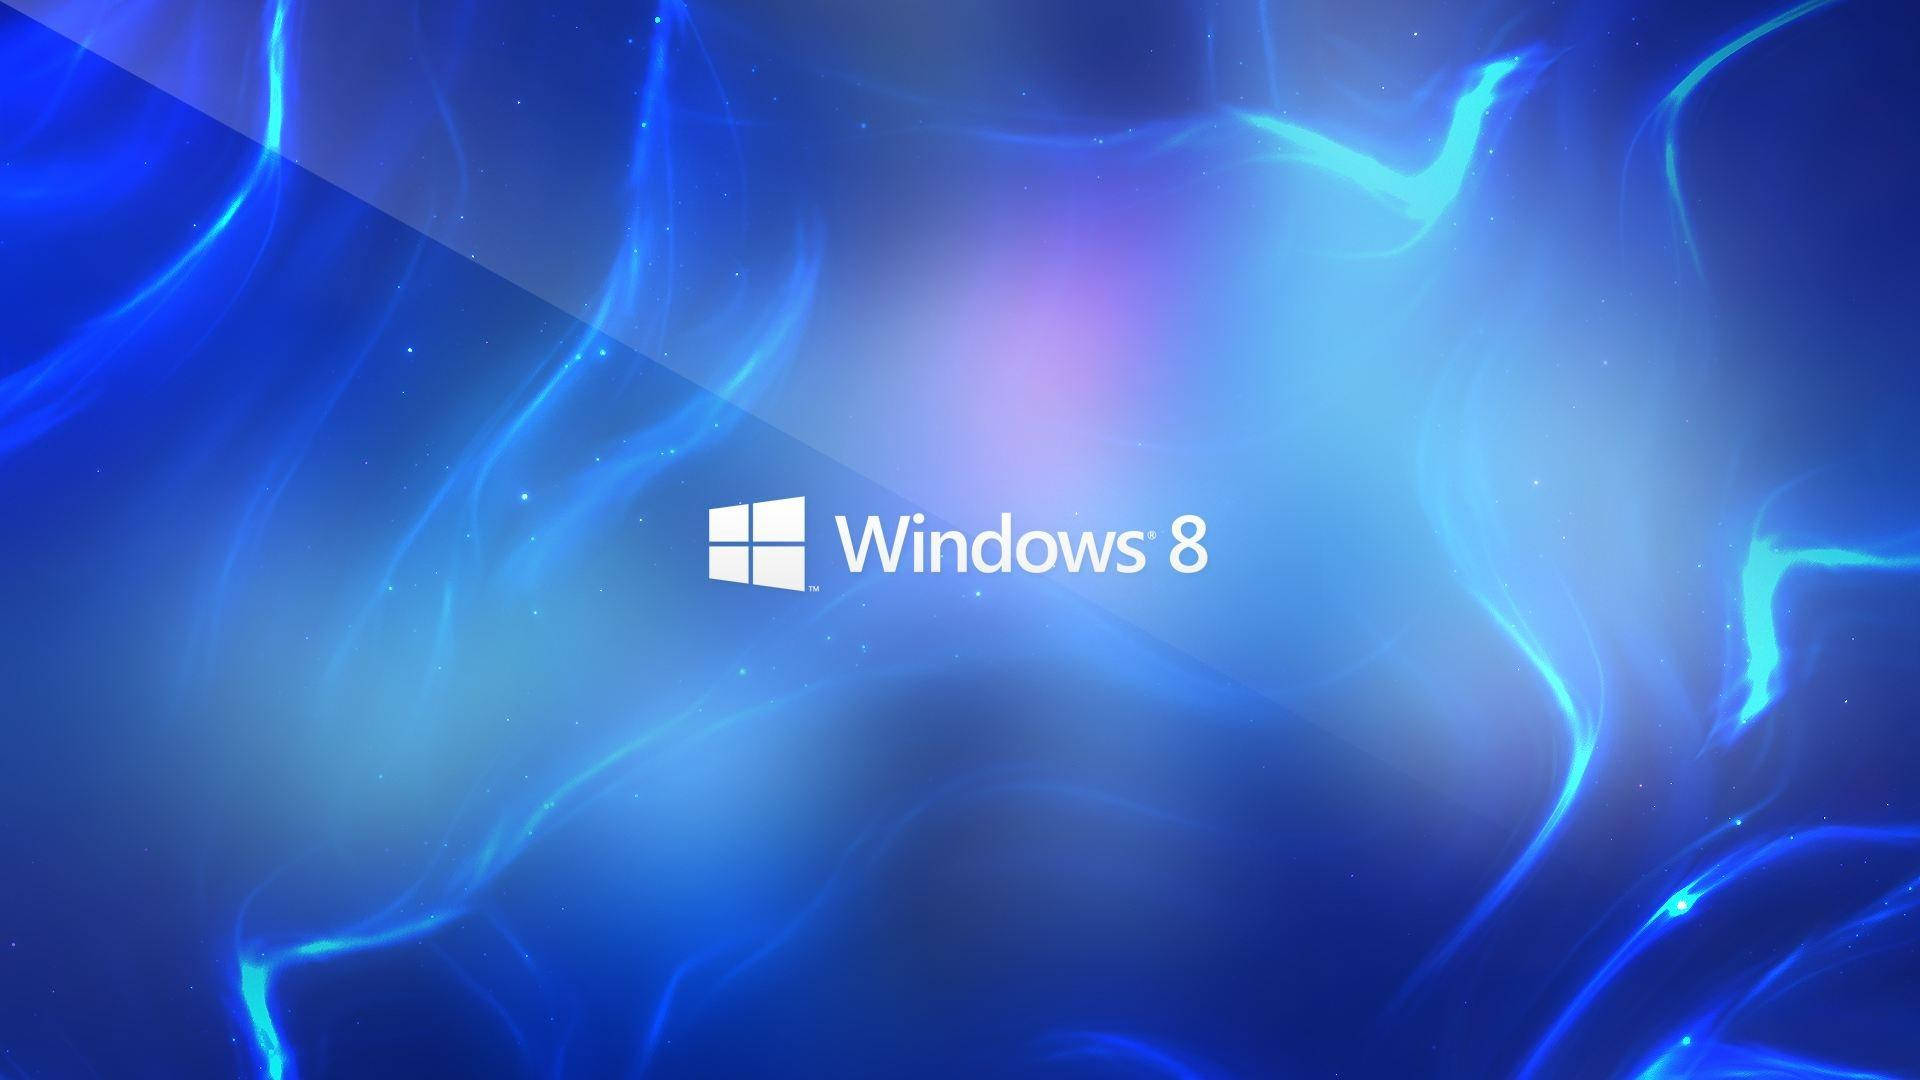 Free Windows 8 Wallpaper Downloads, [100+] Windows 8 Wallpapers for FREE |  